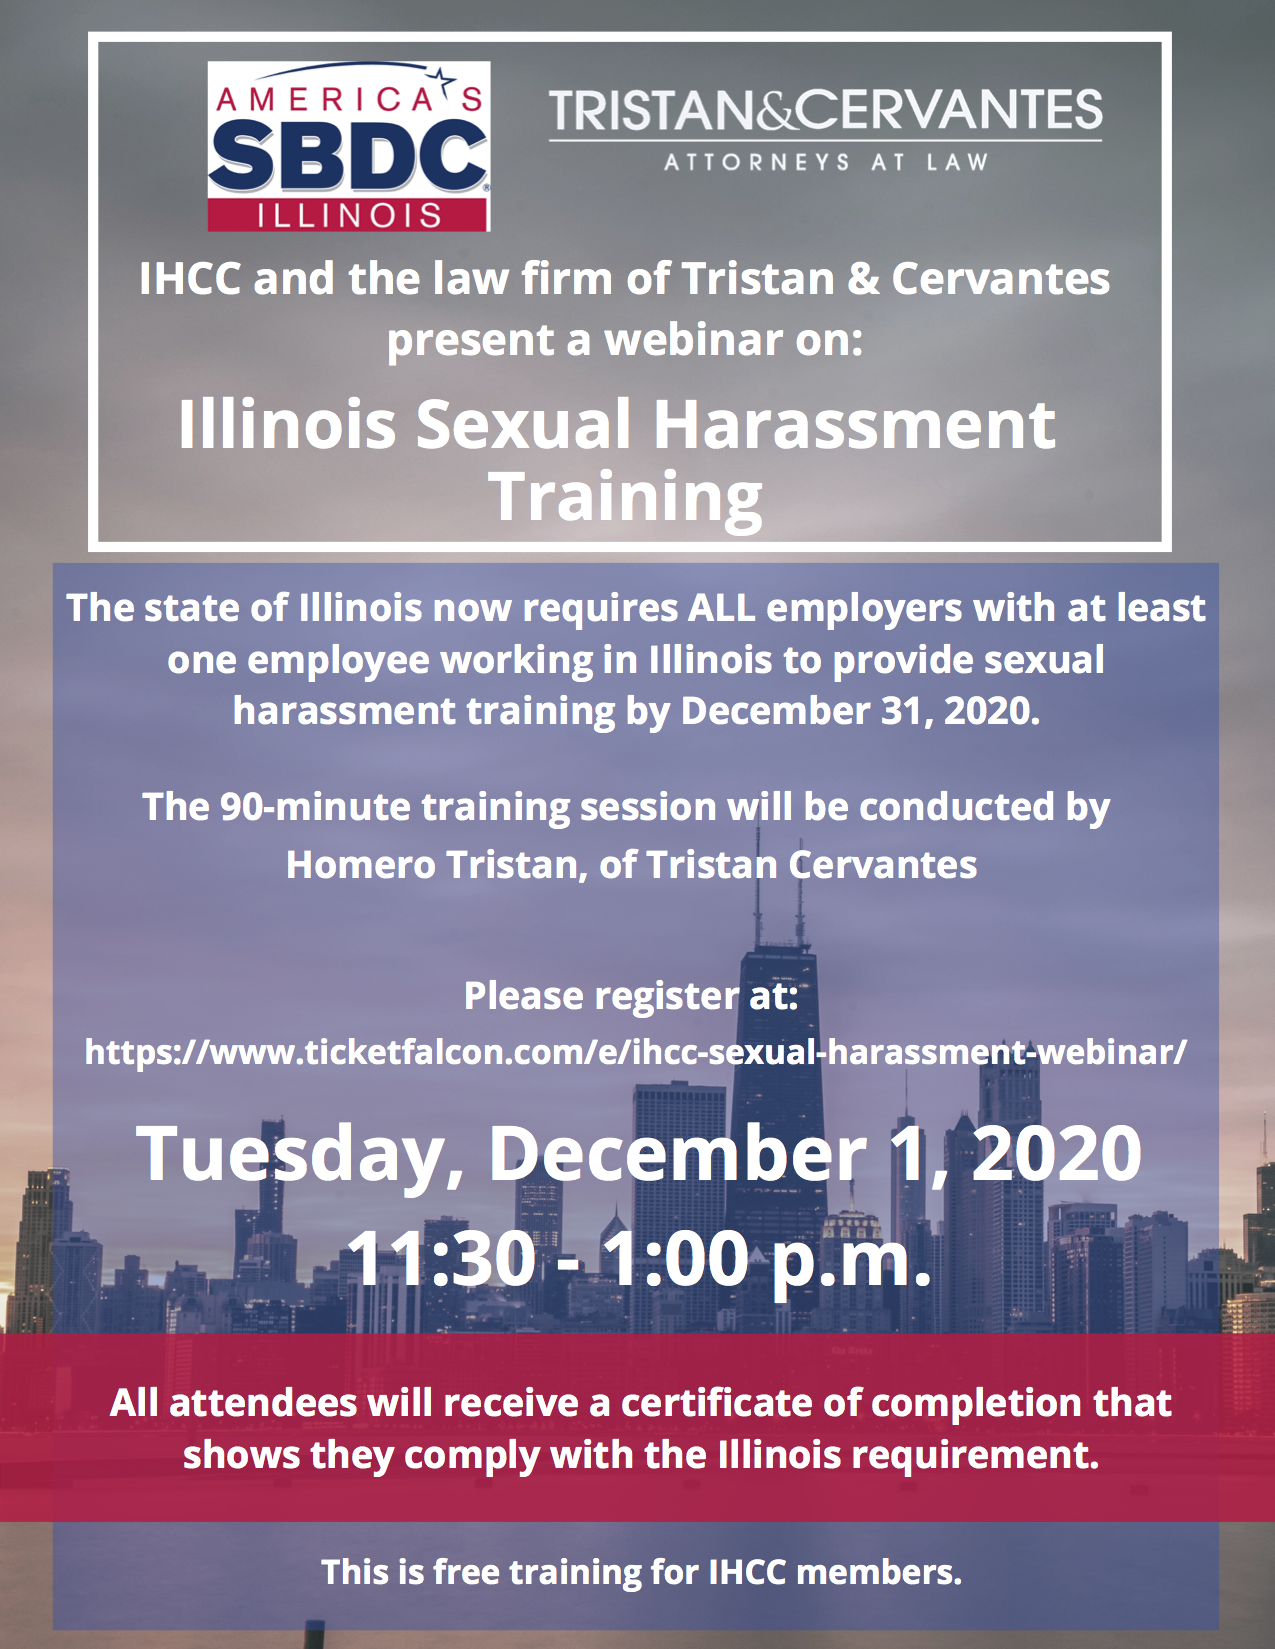 Illinois Sexual Harassment Training Webinar By Homero